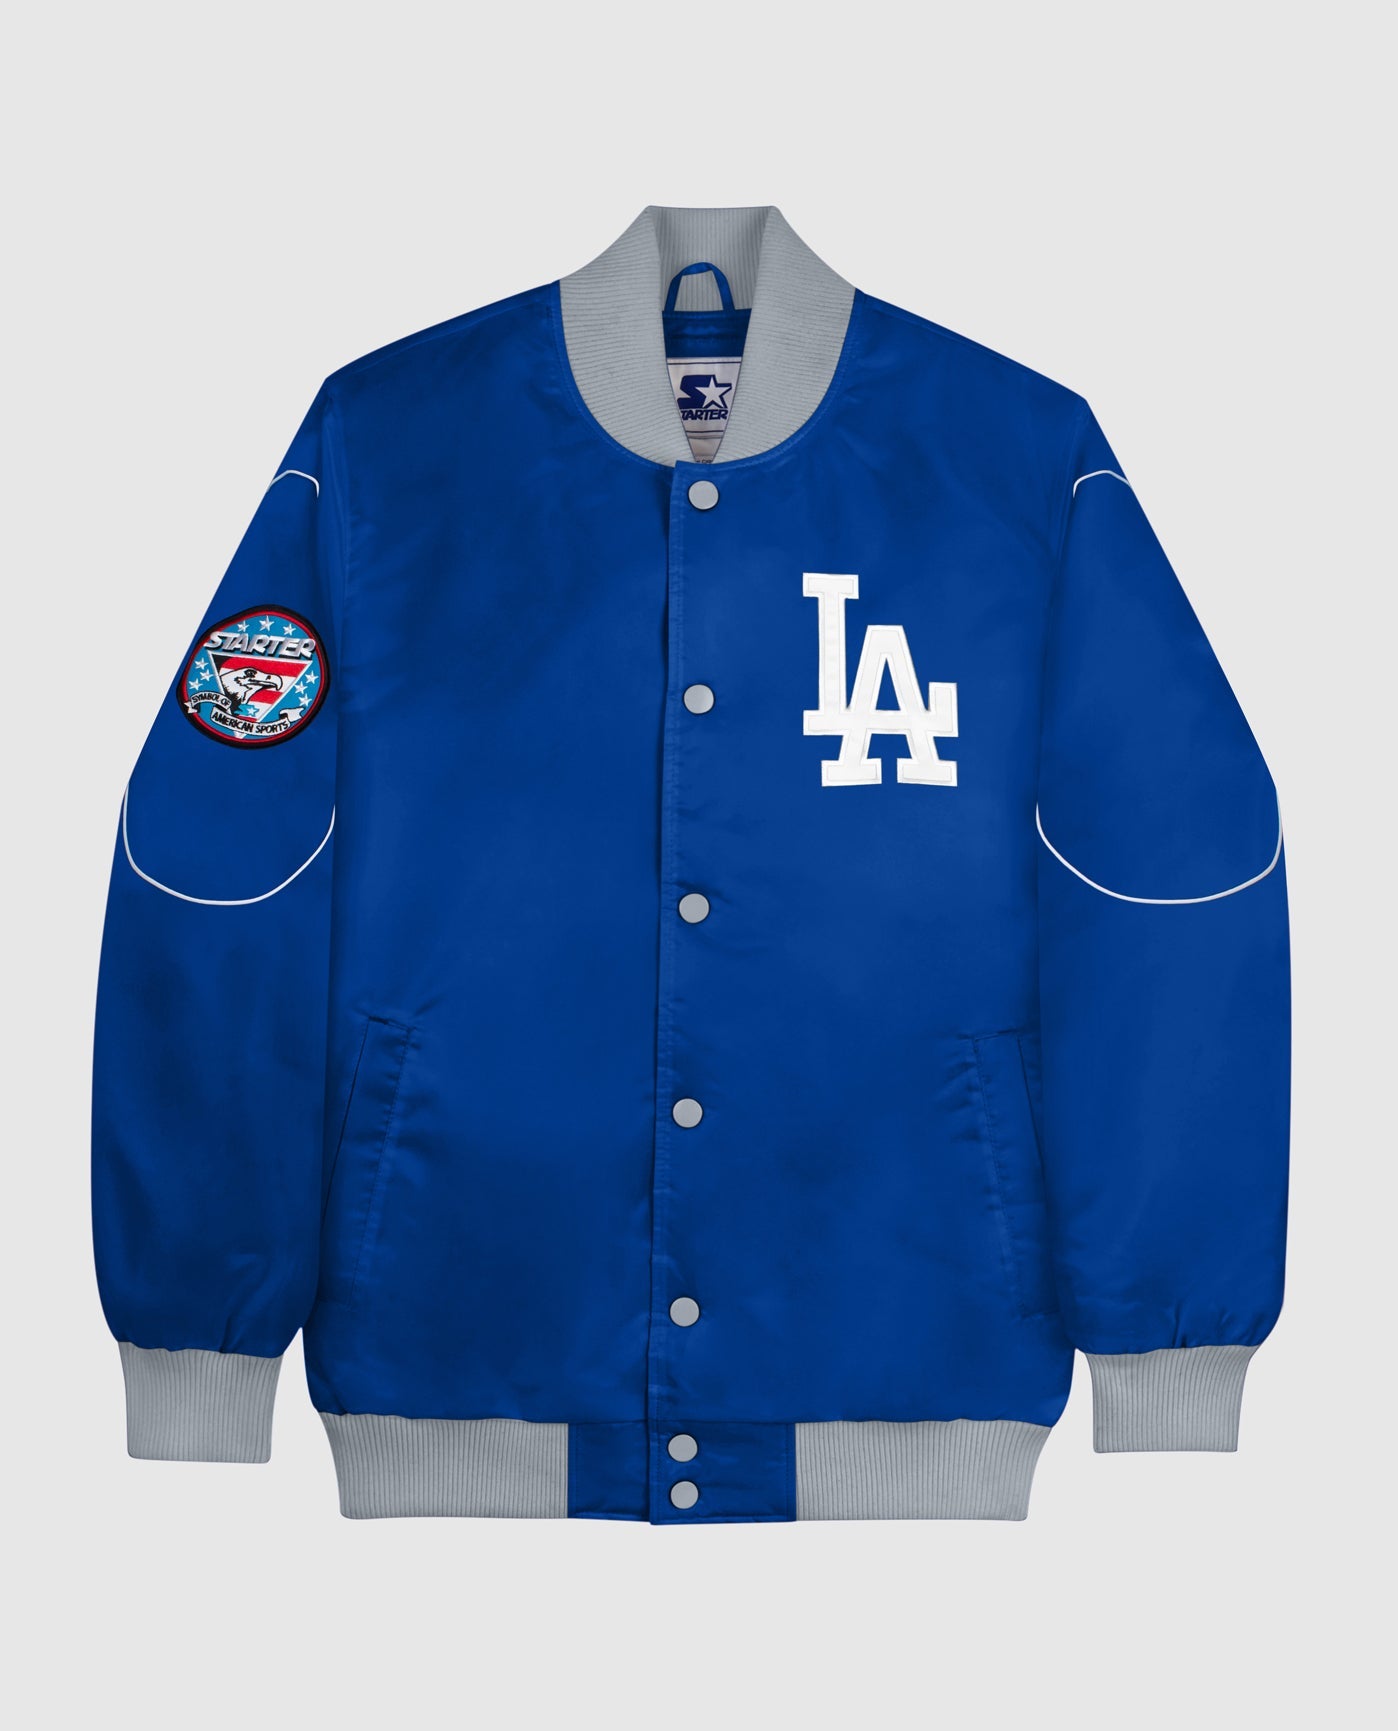 Maker of Jacket MLB Los Angeles Dodgers Blue White Varsity